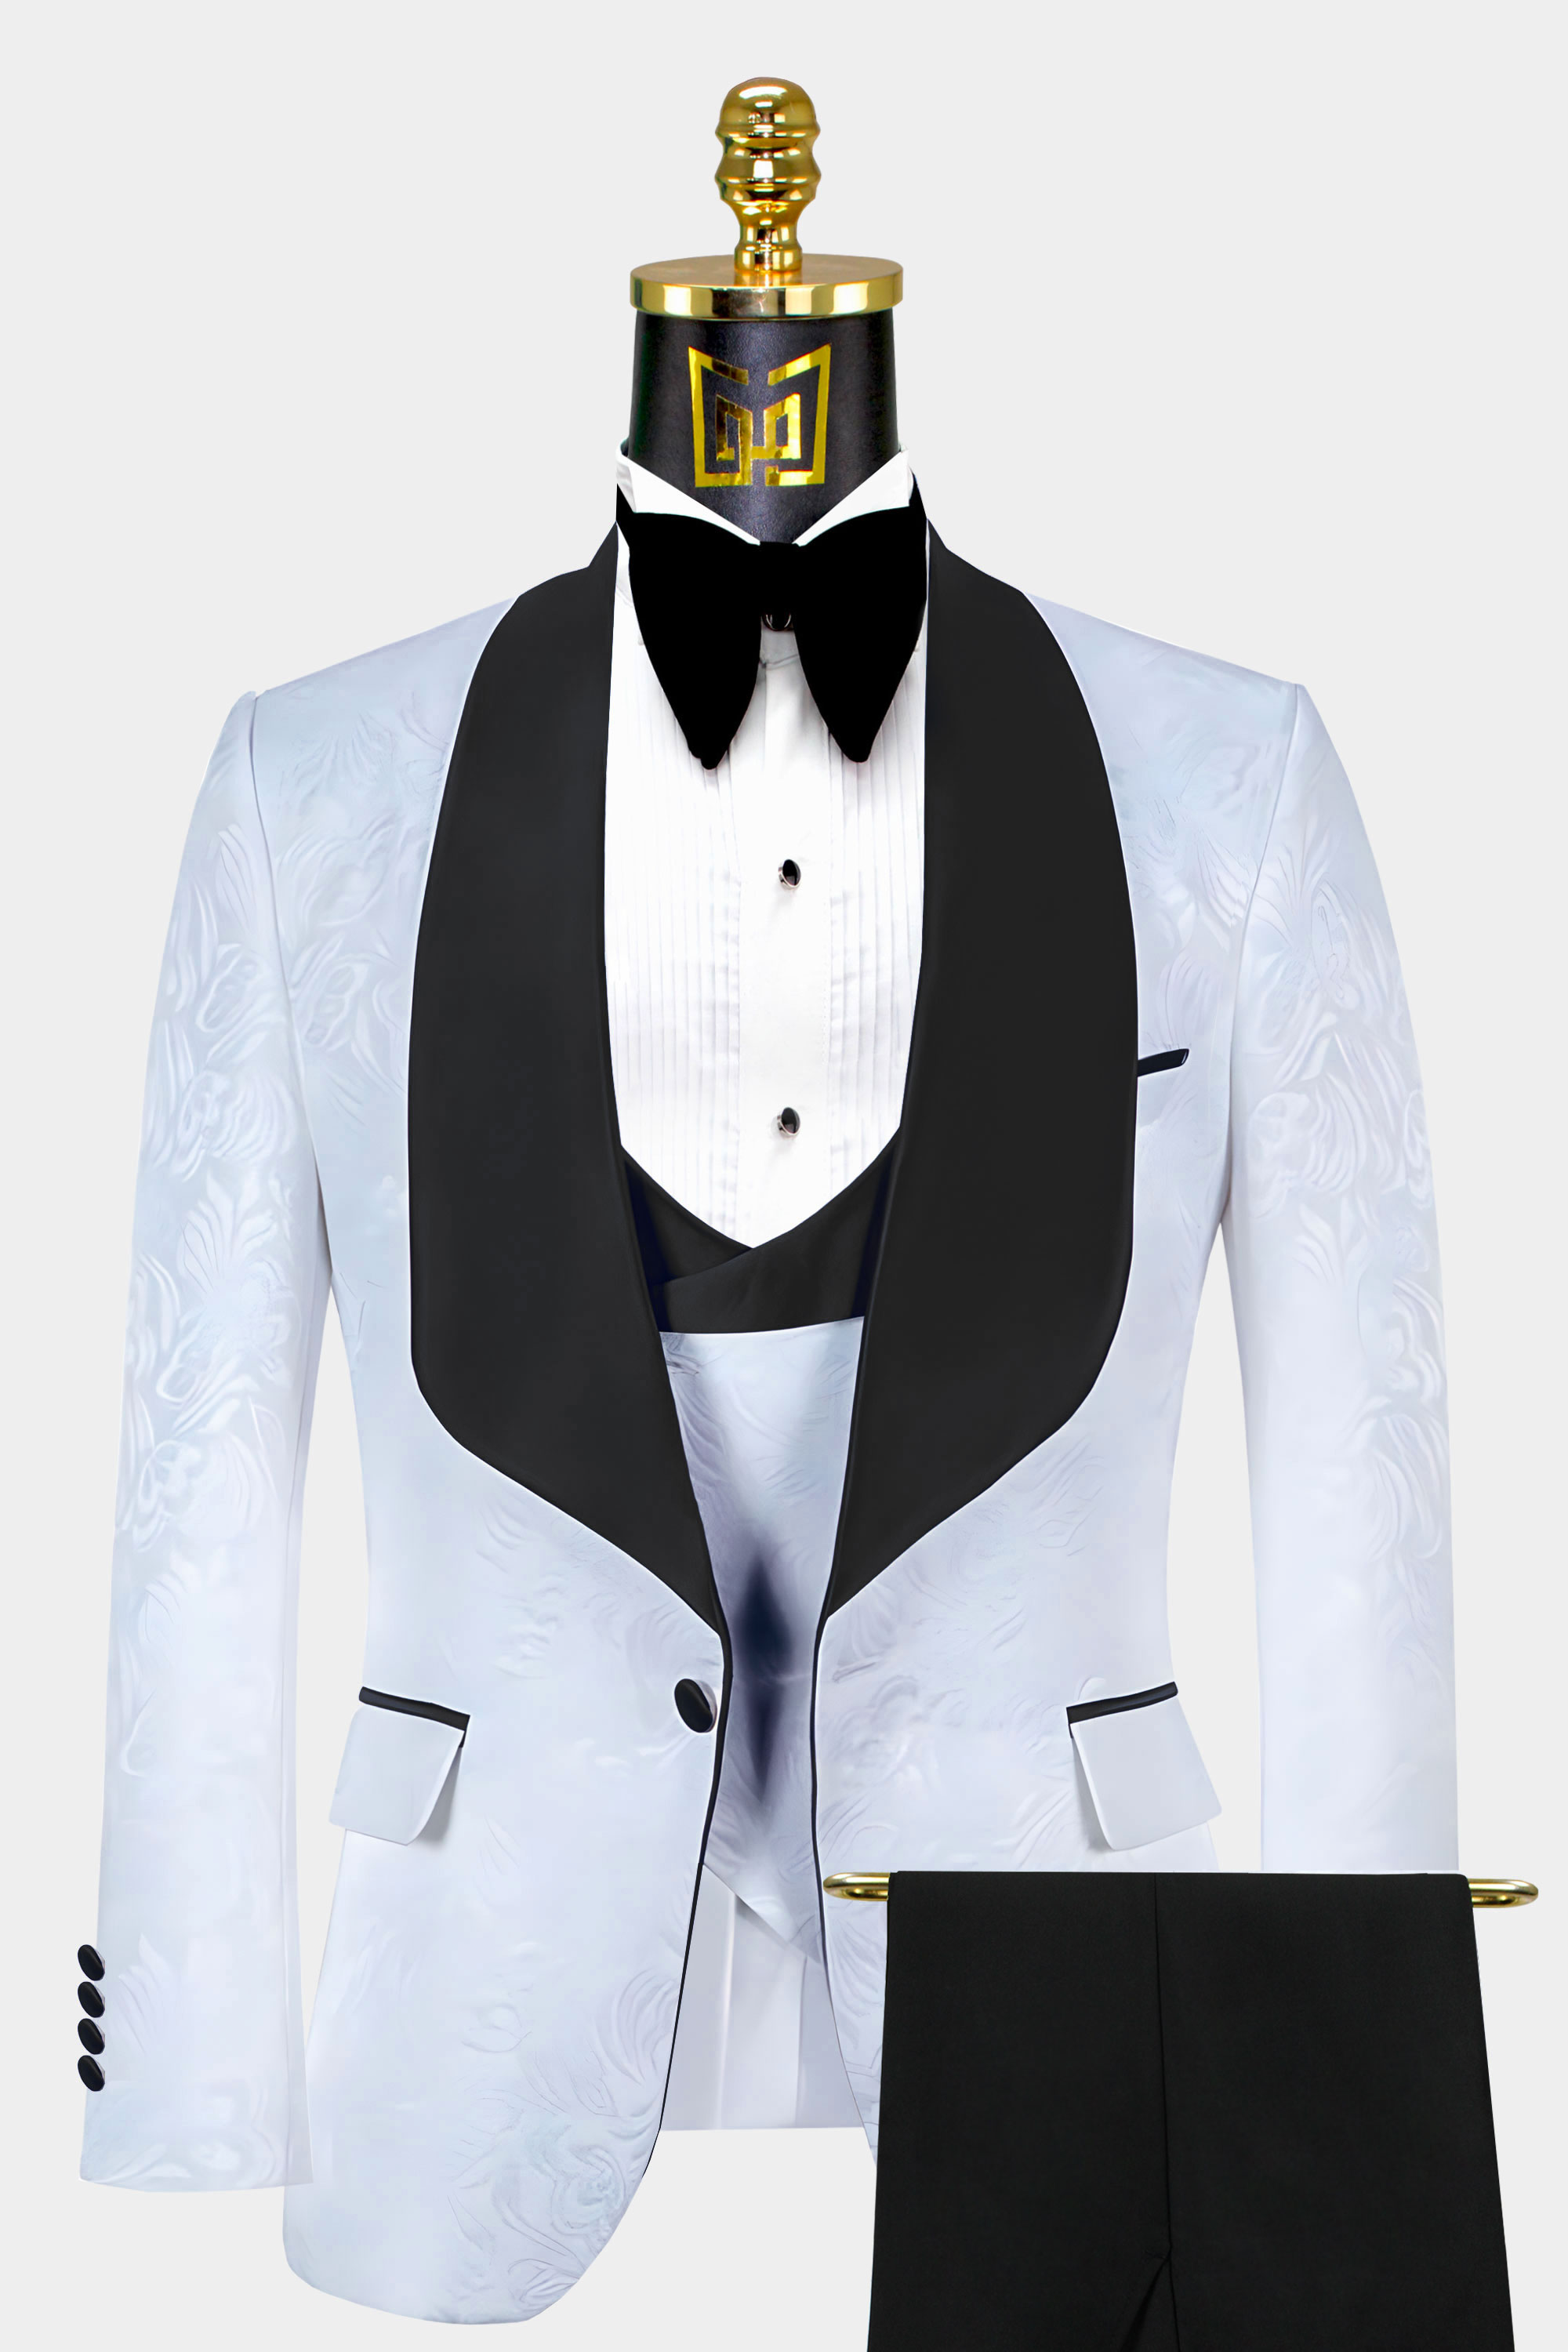 White-and-Black-Tuxedo-Wedding-Prom-Groom-Suit-For-Men-from-Gentlemansguru.com